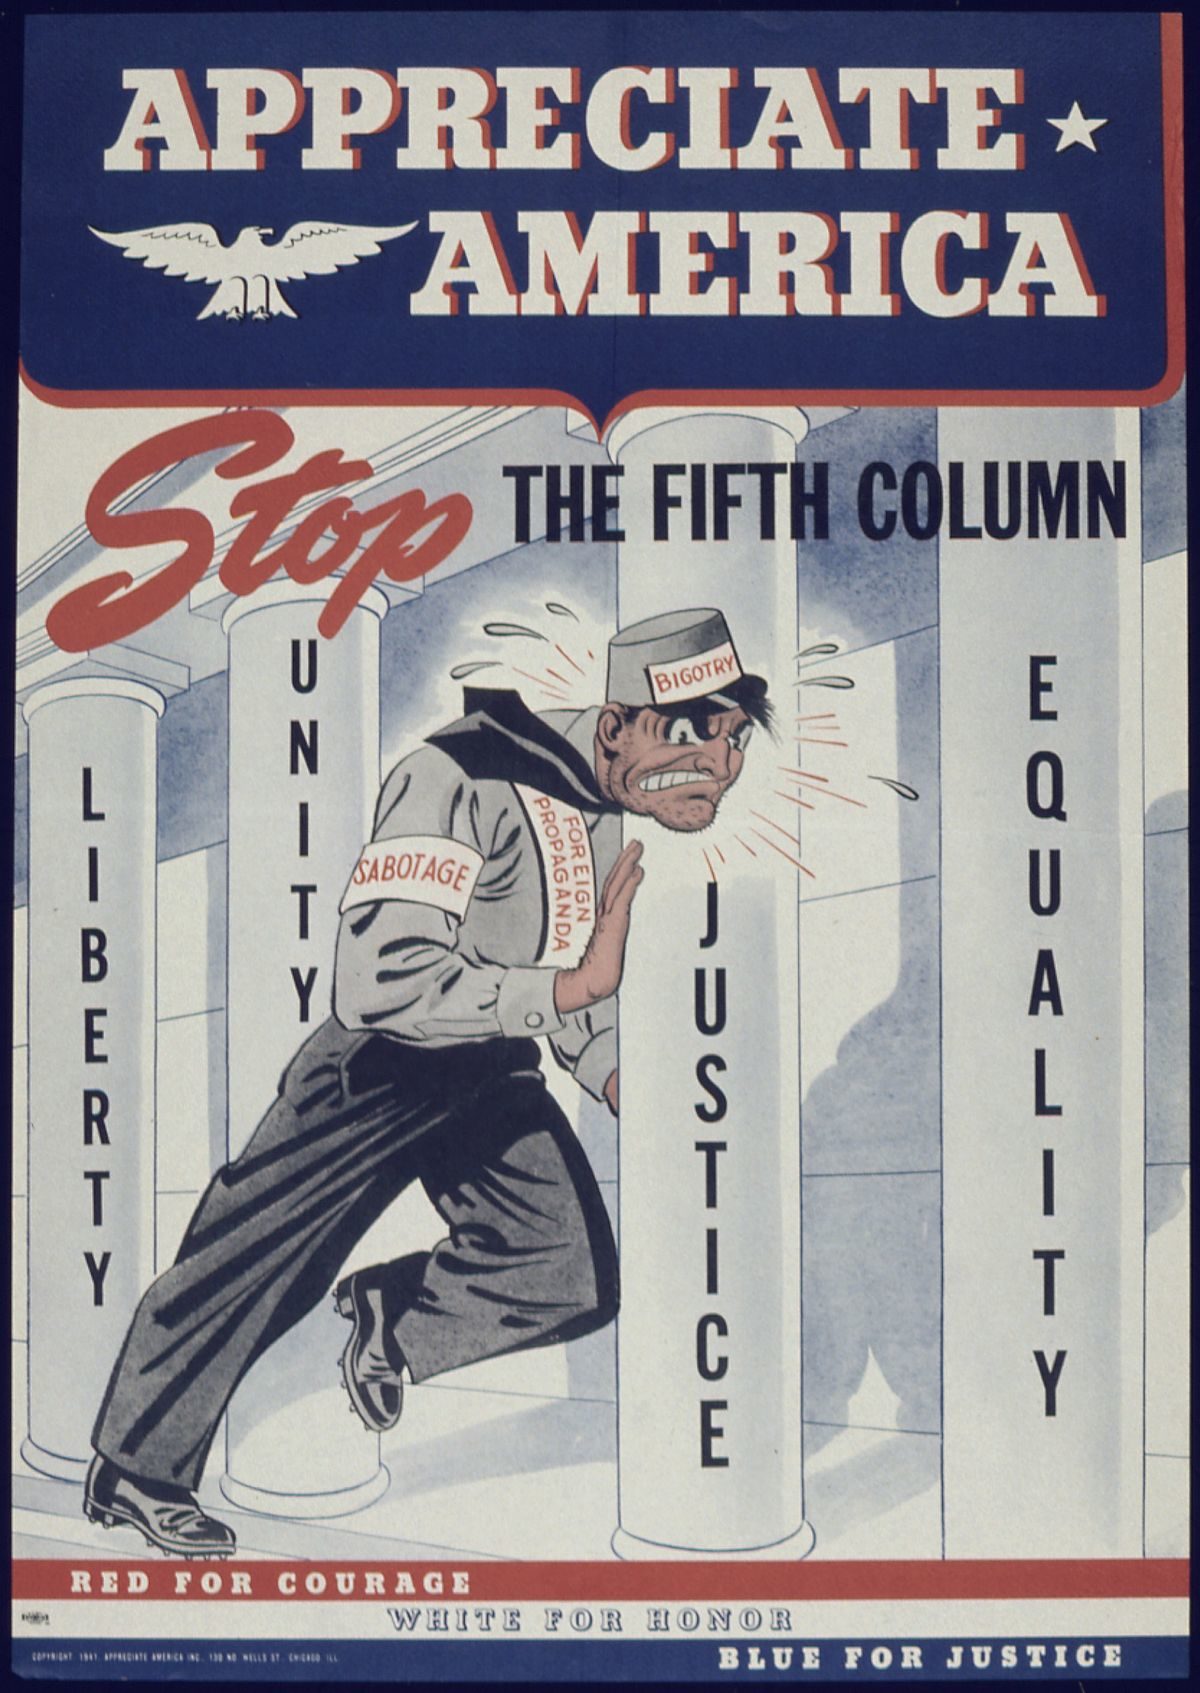 American propaganda